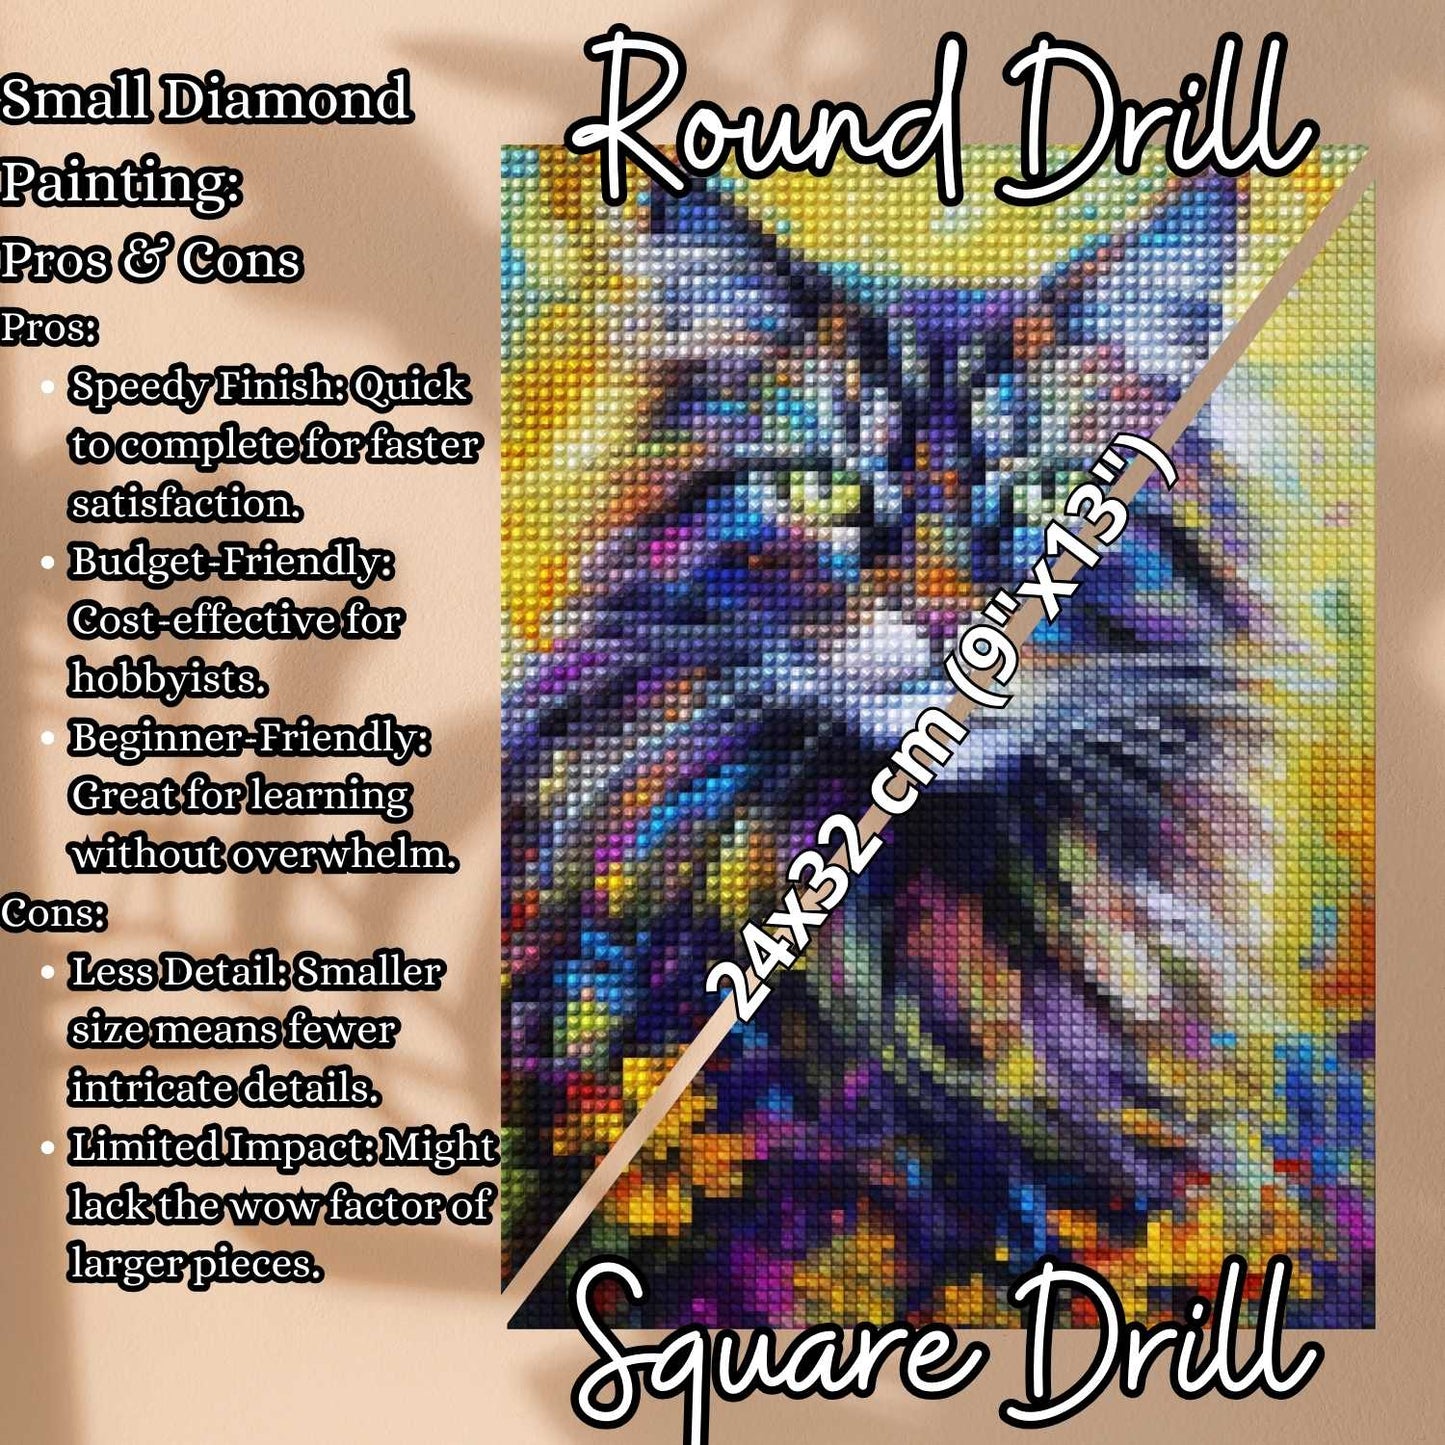 Sunlit Feline Melody - Cat Diamond Painting Kit - YLJ Art Shop - YLJ Art Shop